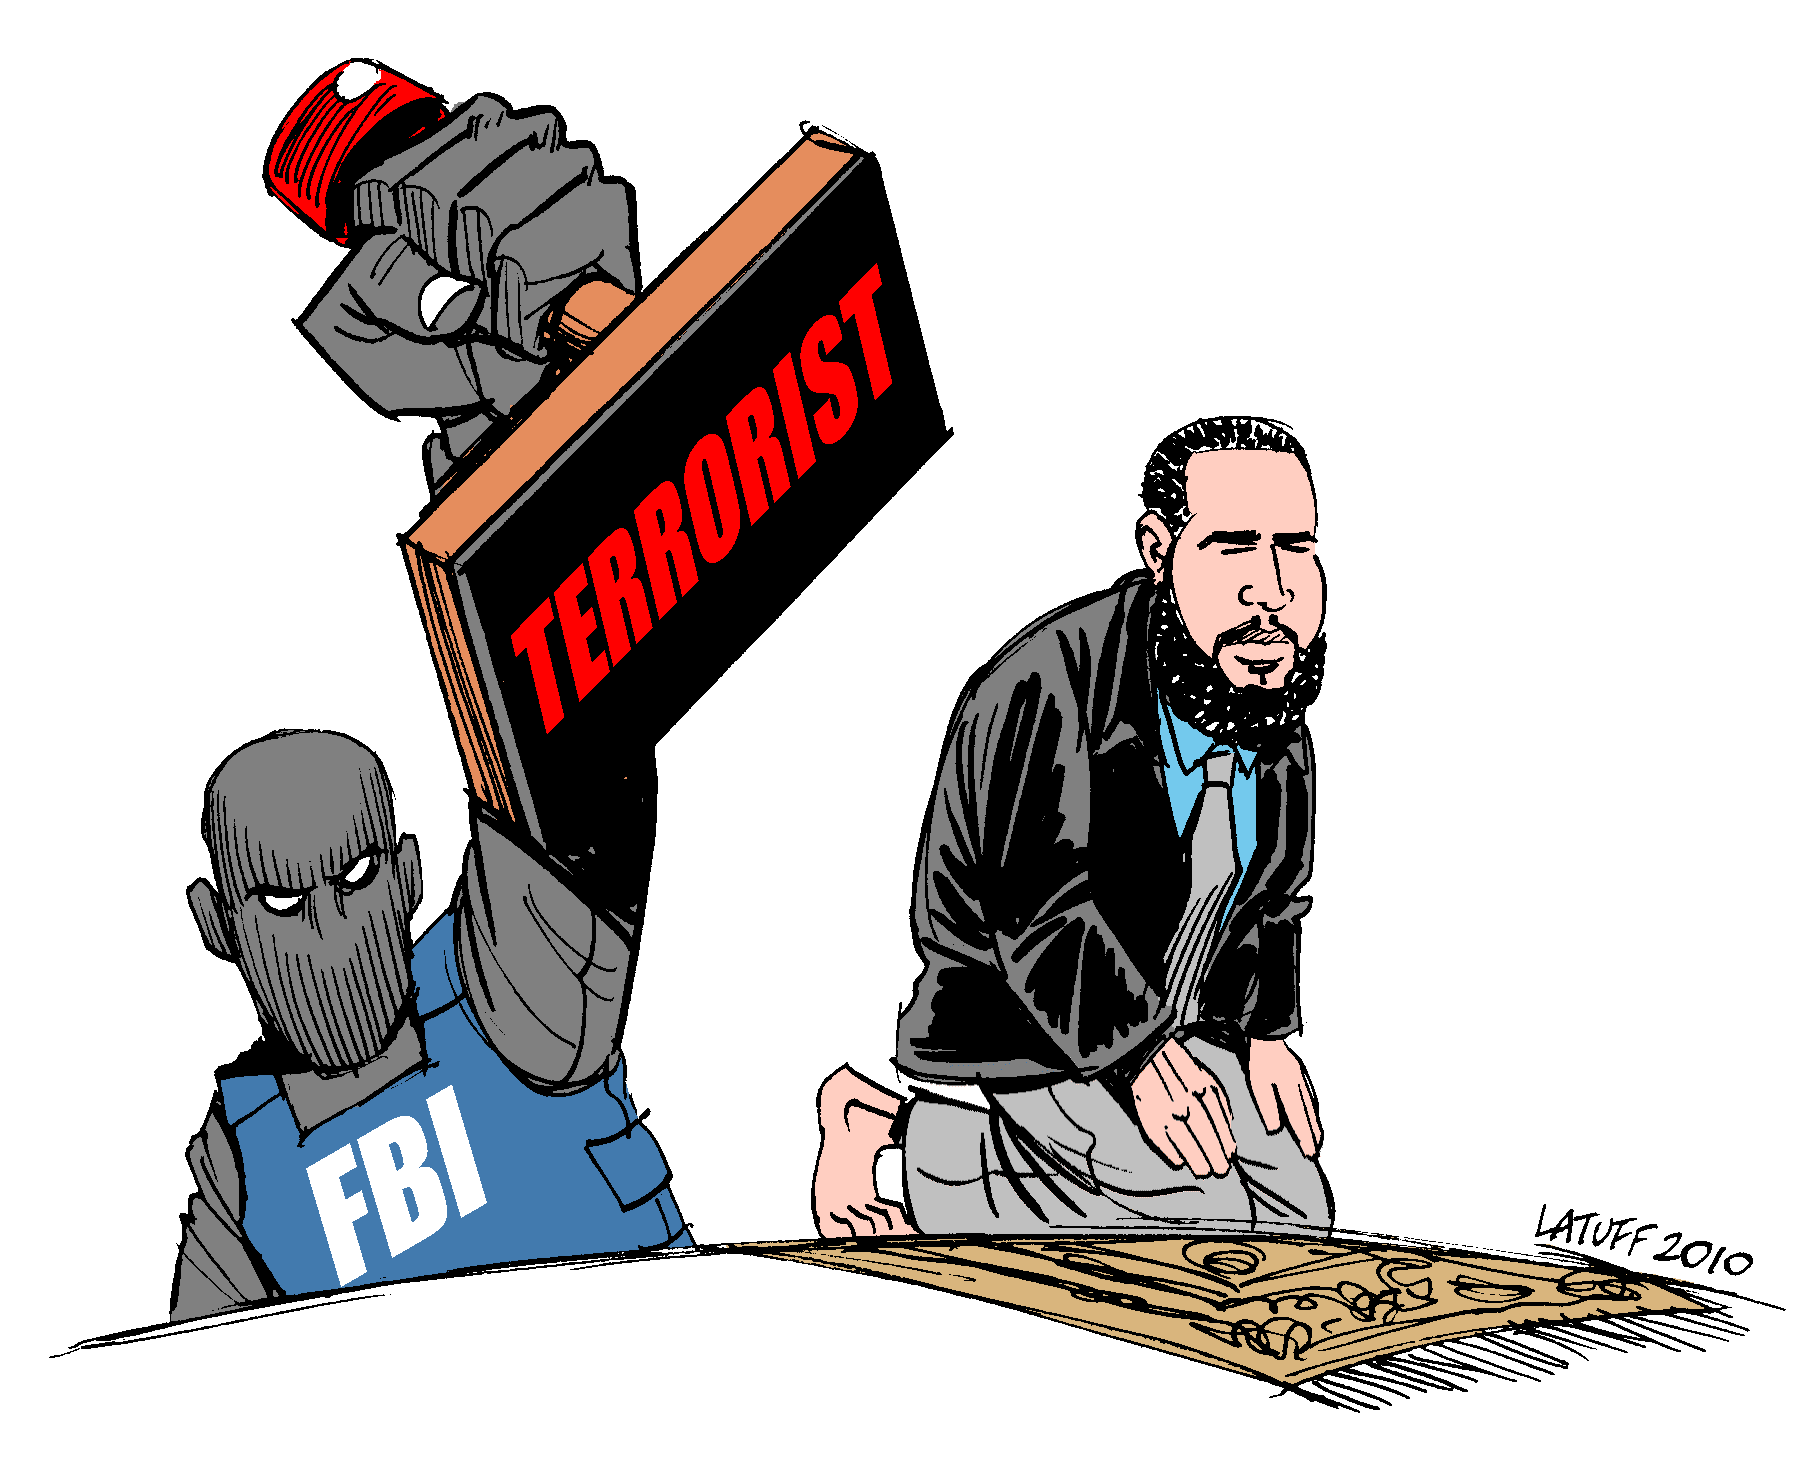 muslimterrorist